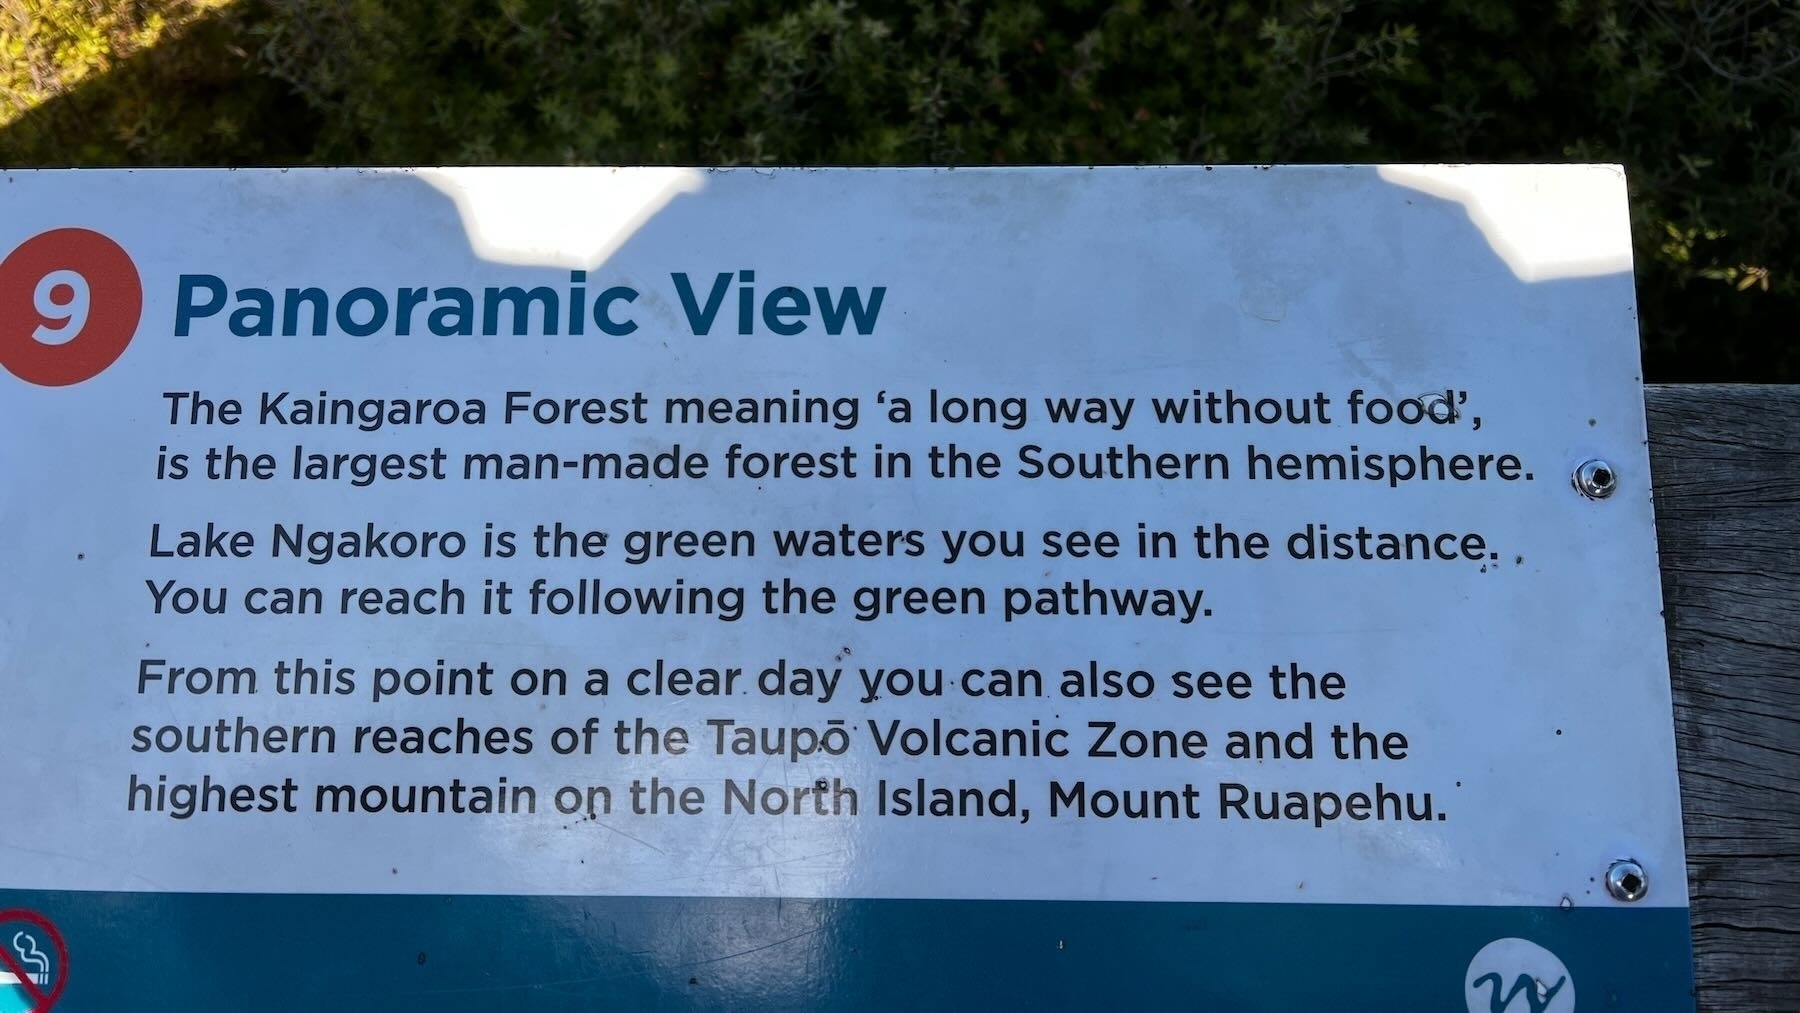 Panoramic view info board mentions Kaingaroa forest and green Lake Ngakoro. 